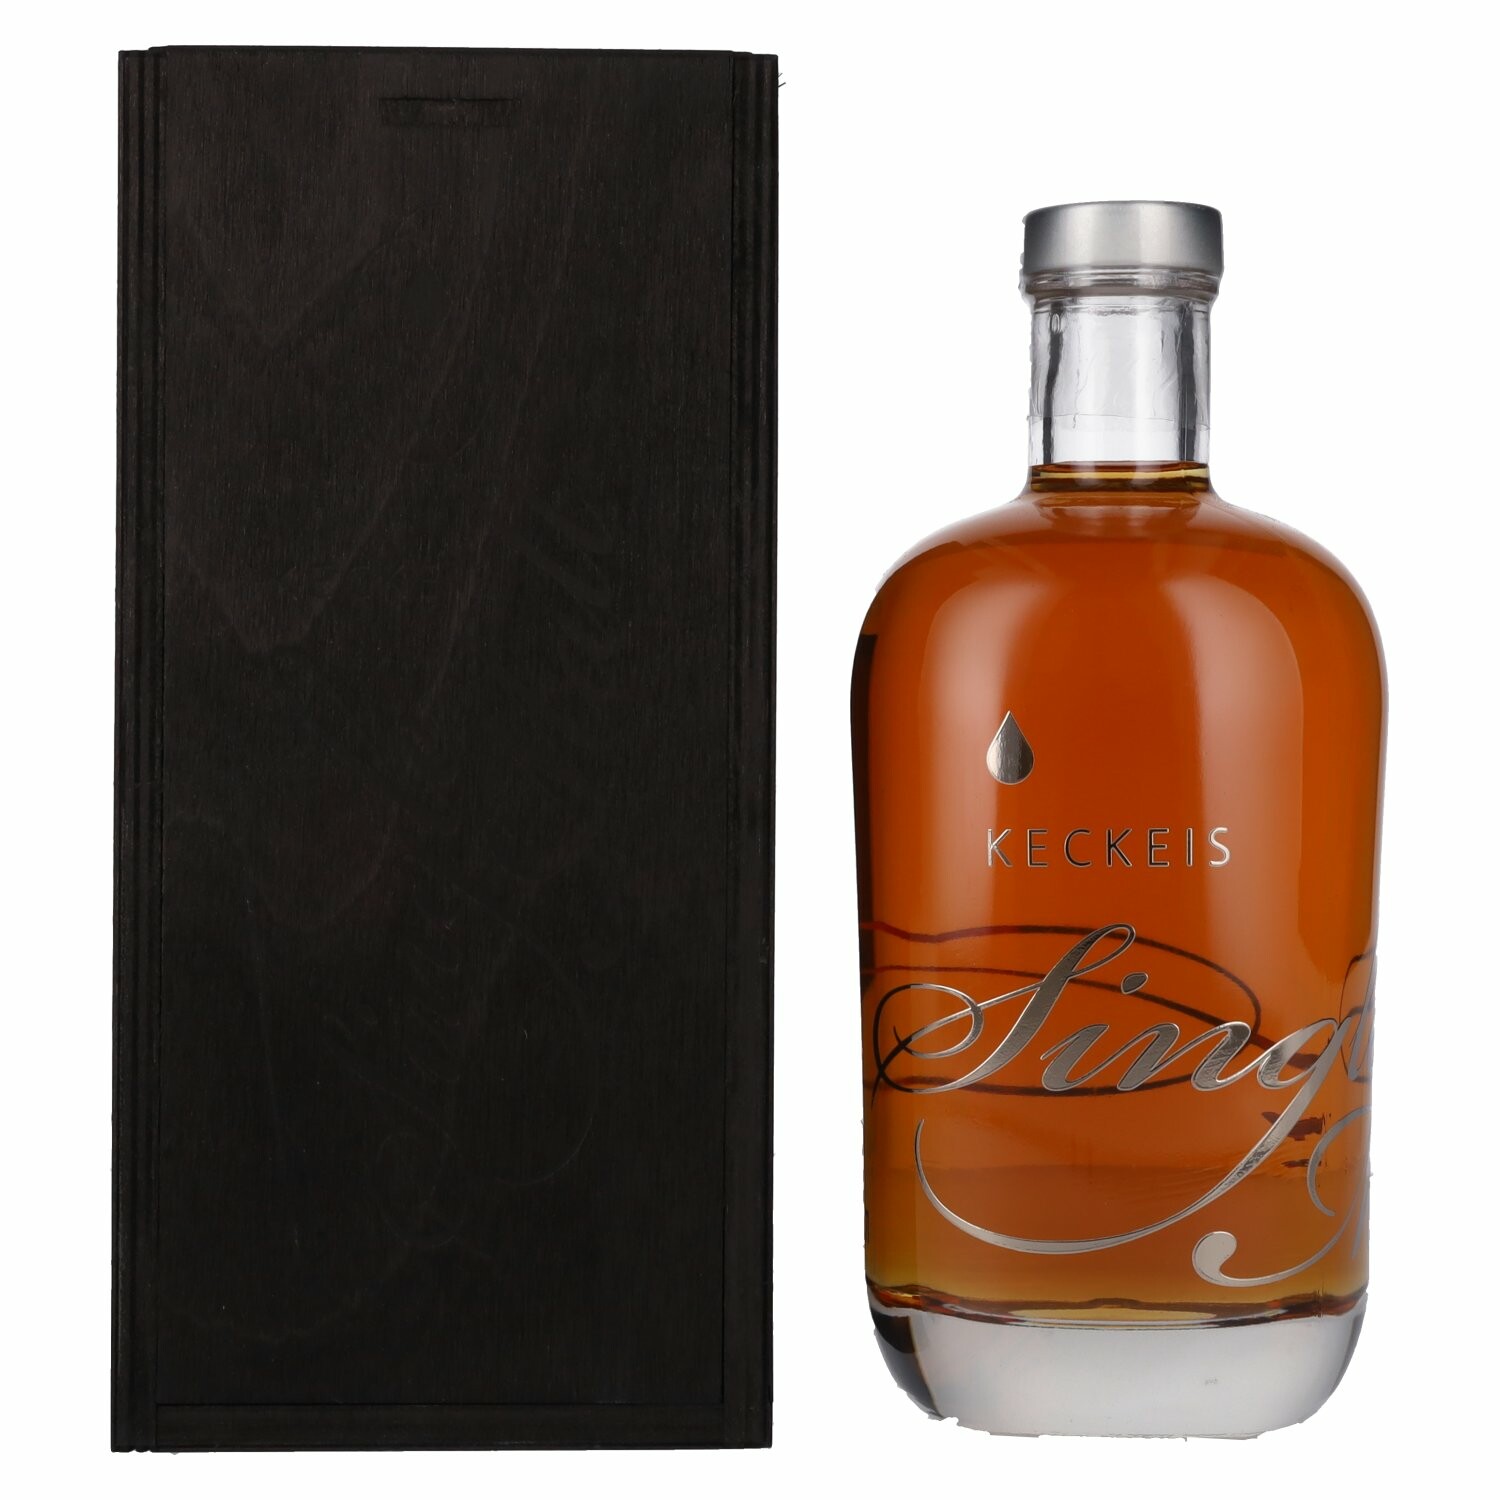 Keckeis Single Malt Whisky 42% Vol. 0,7l in Holzkiste